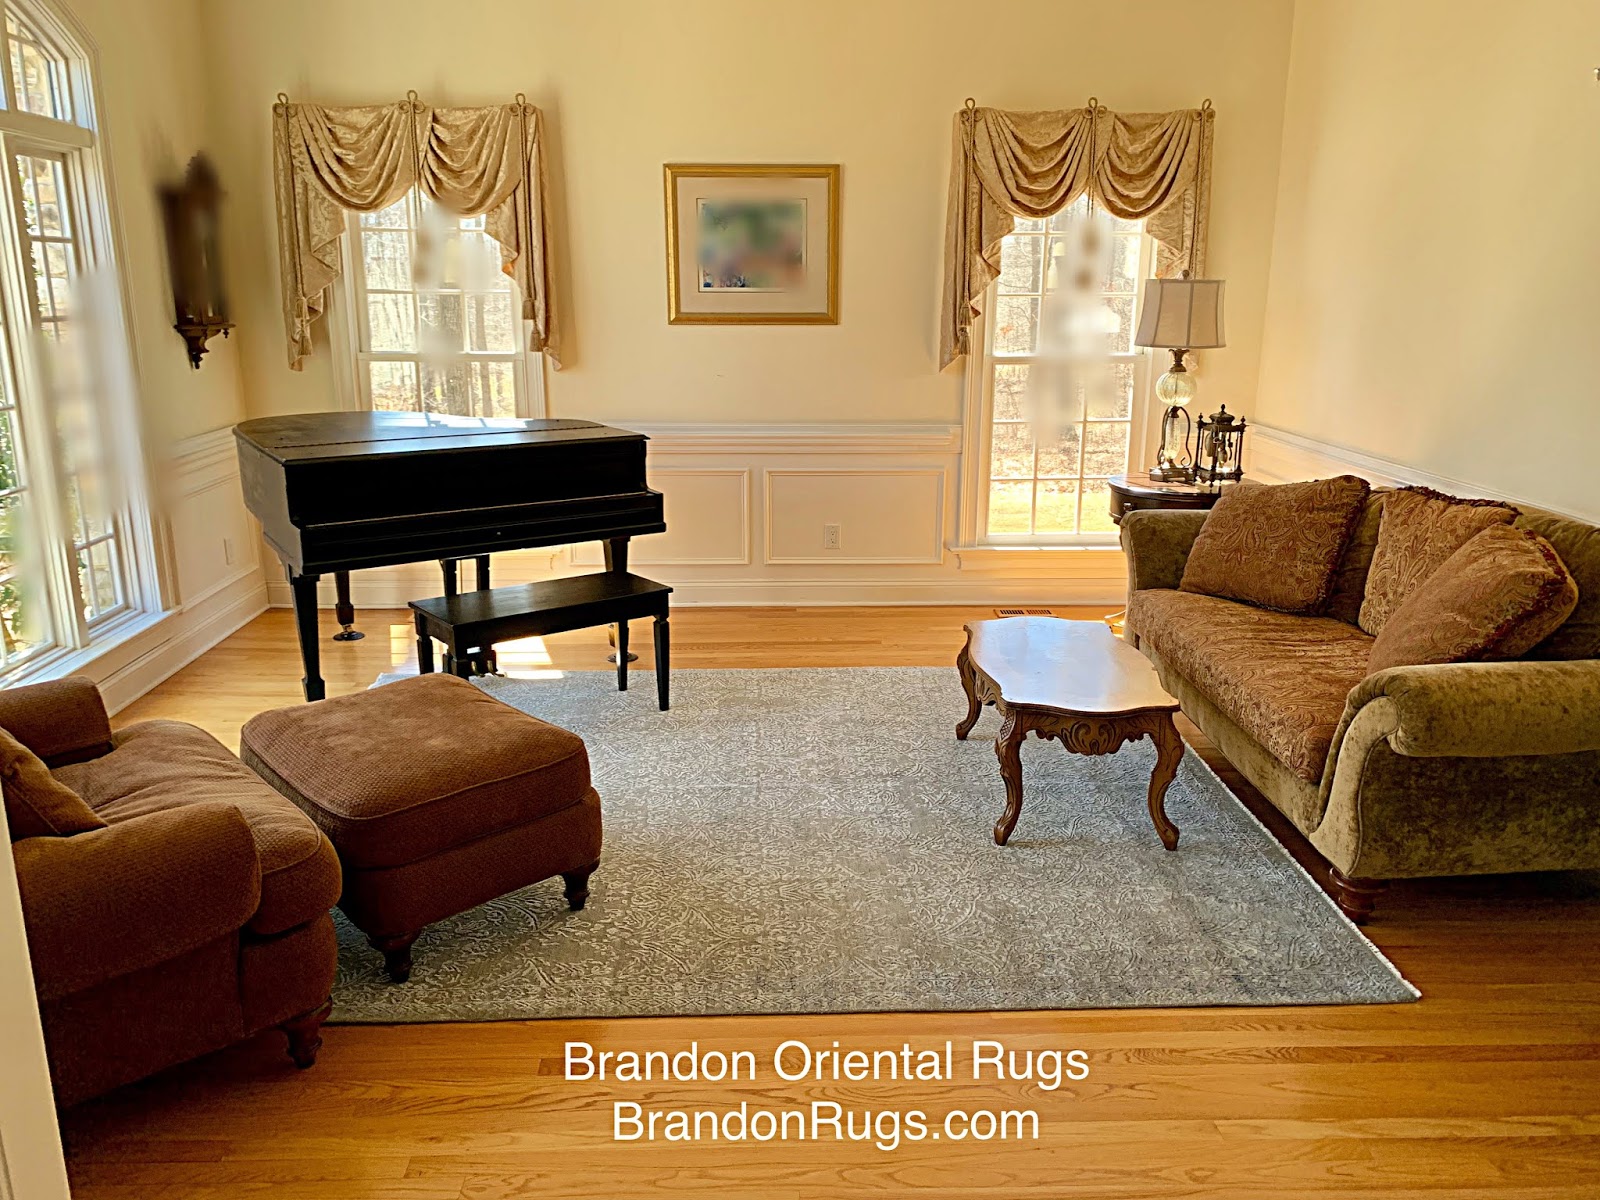 Brandon Oriental Rugs: Brandon Oriental Rugs_Bucks County Rugs_New Hope